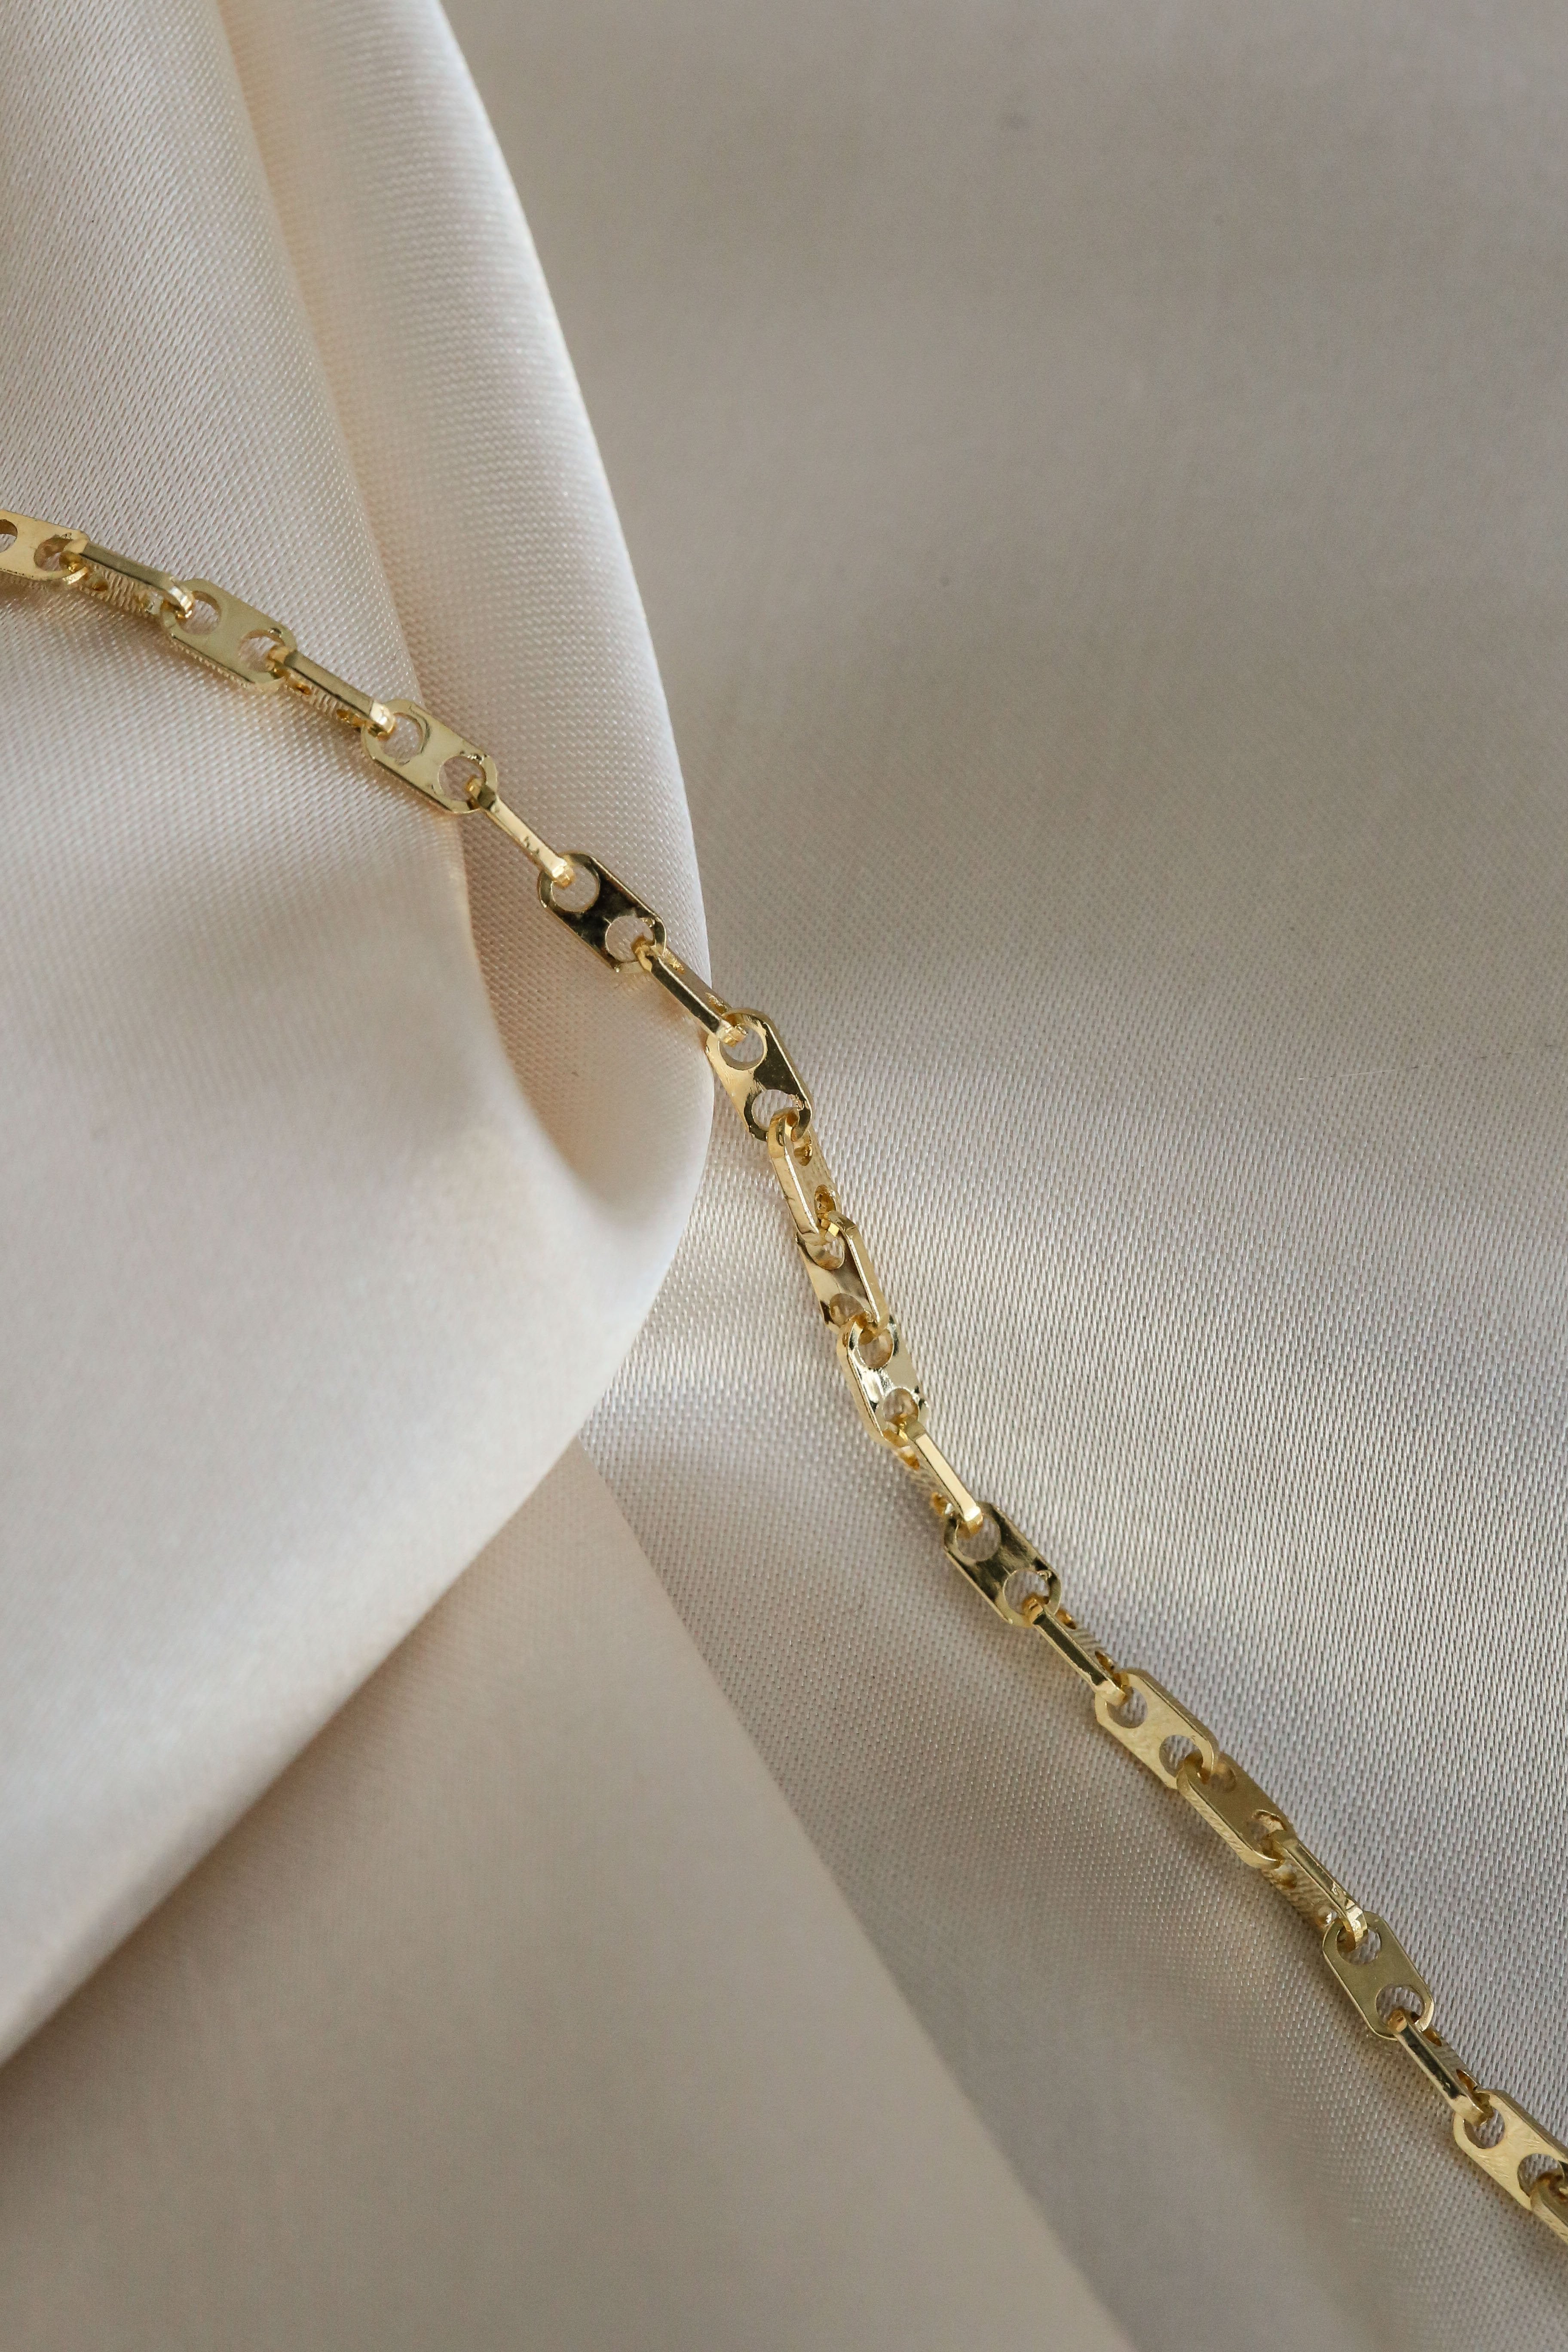 Nicolette Vintage Chain bracelet - Boutique Minimaliste has waterproof, durable, elegant and vintage inspired jewelry